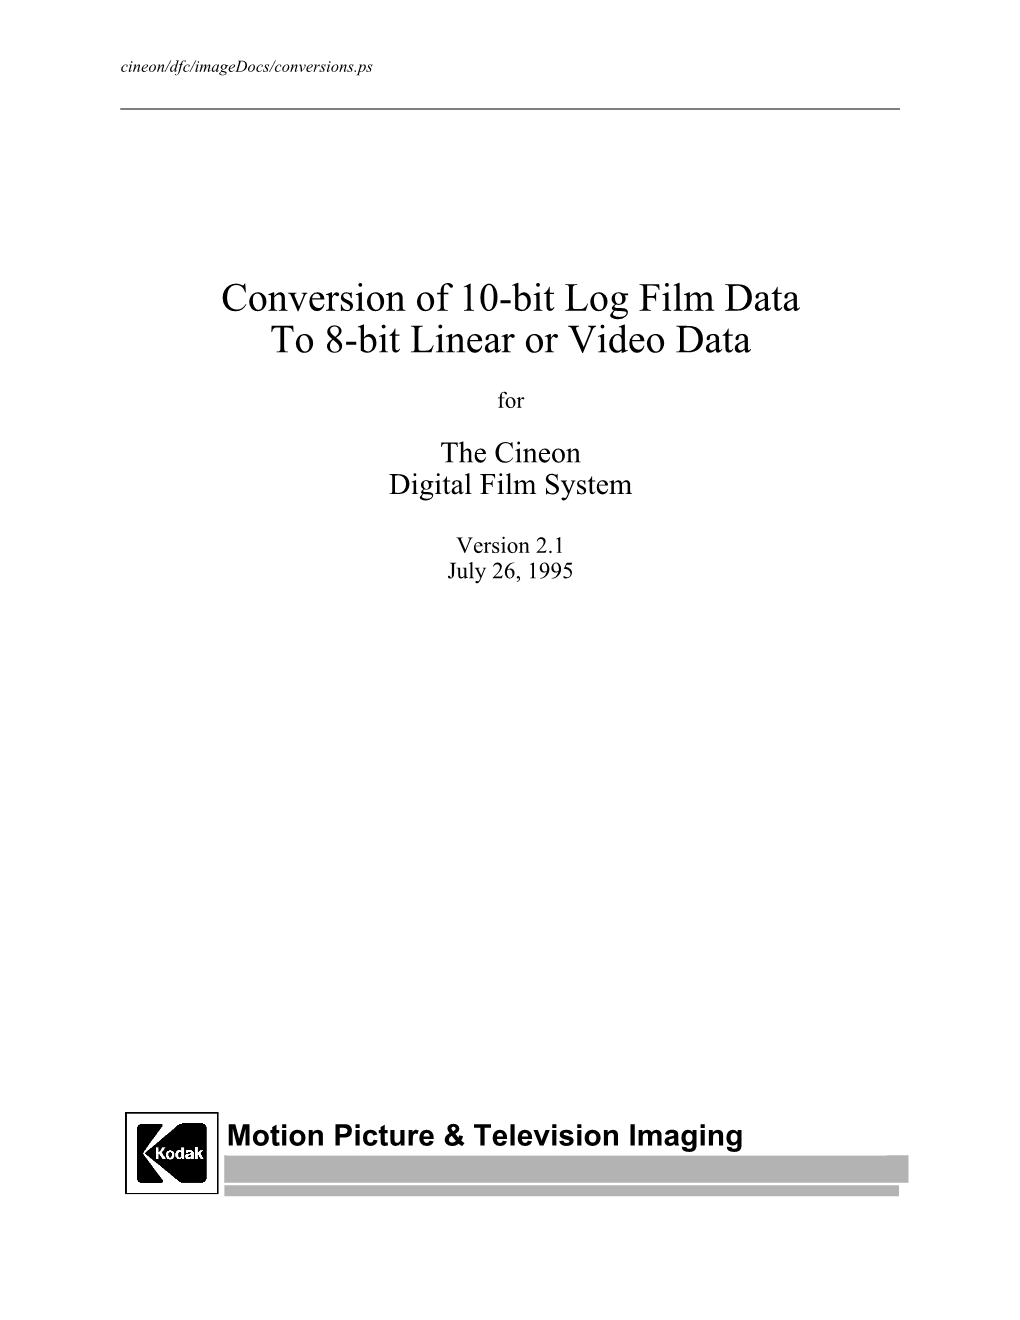 Conversion of 10-Bit Log Film Data to 8-Bit Linear Or Video Data